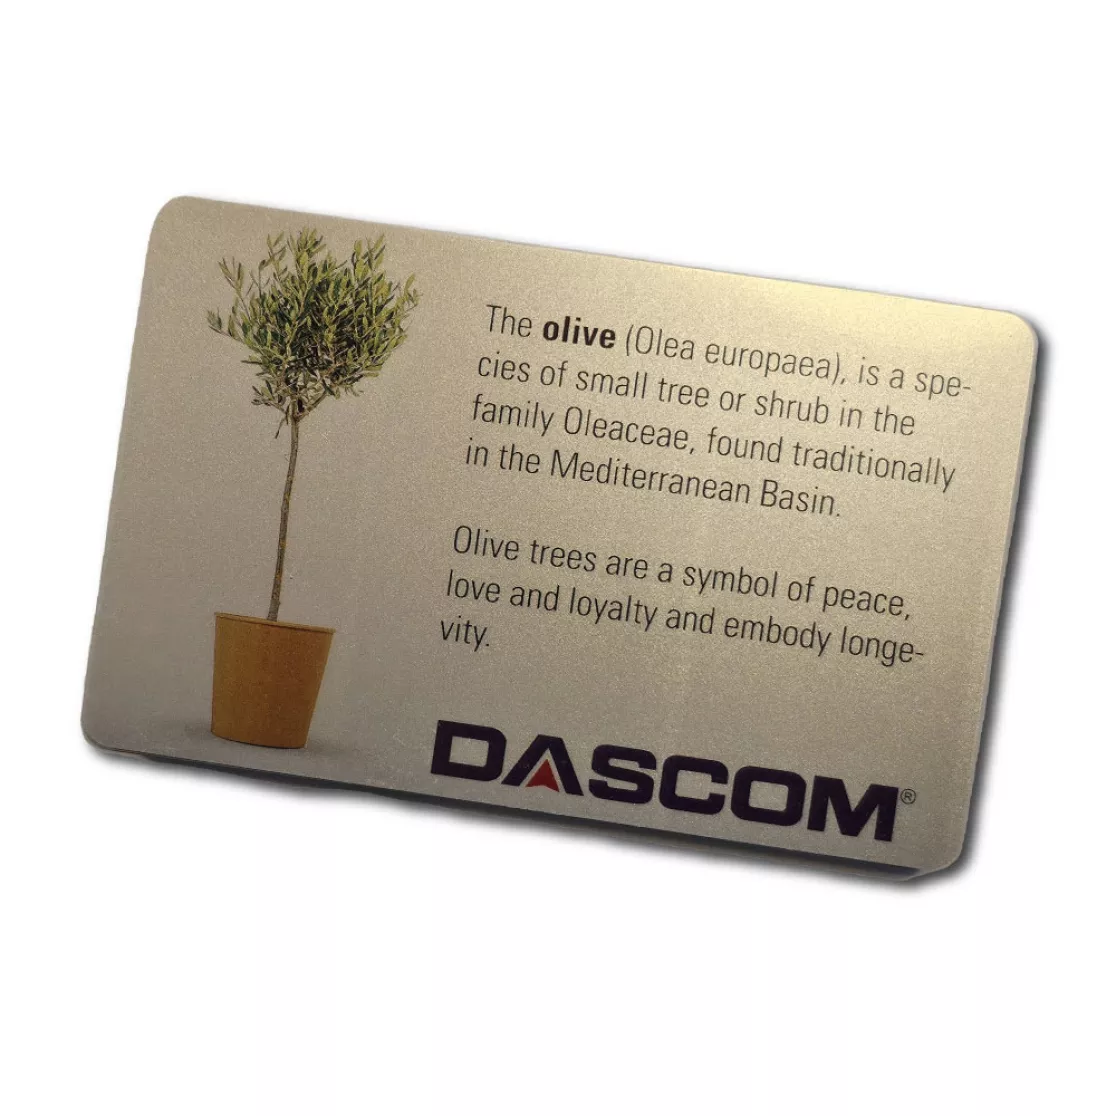 Dascom with metallic print